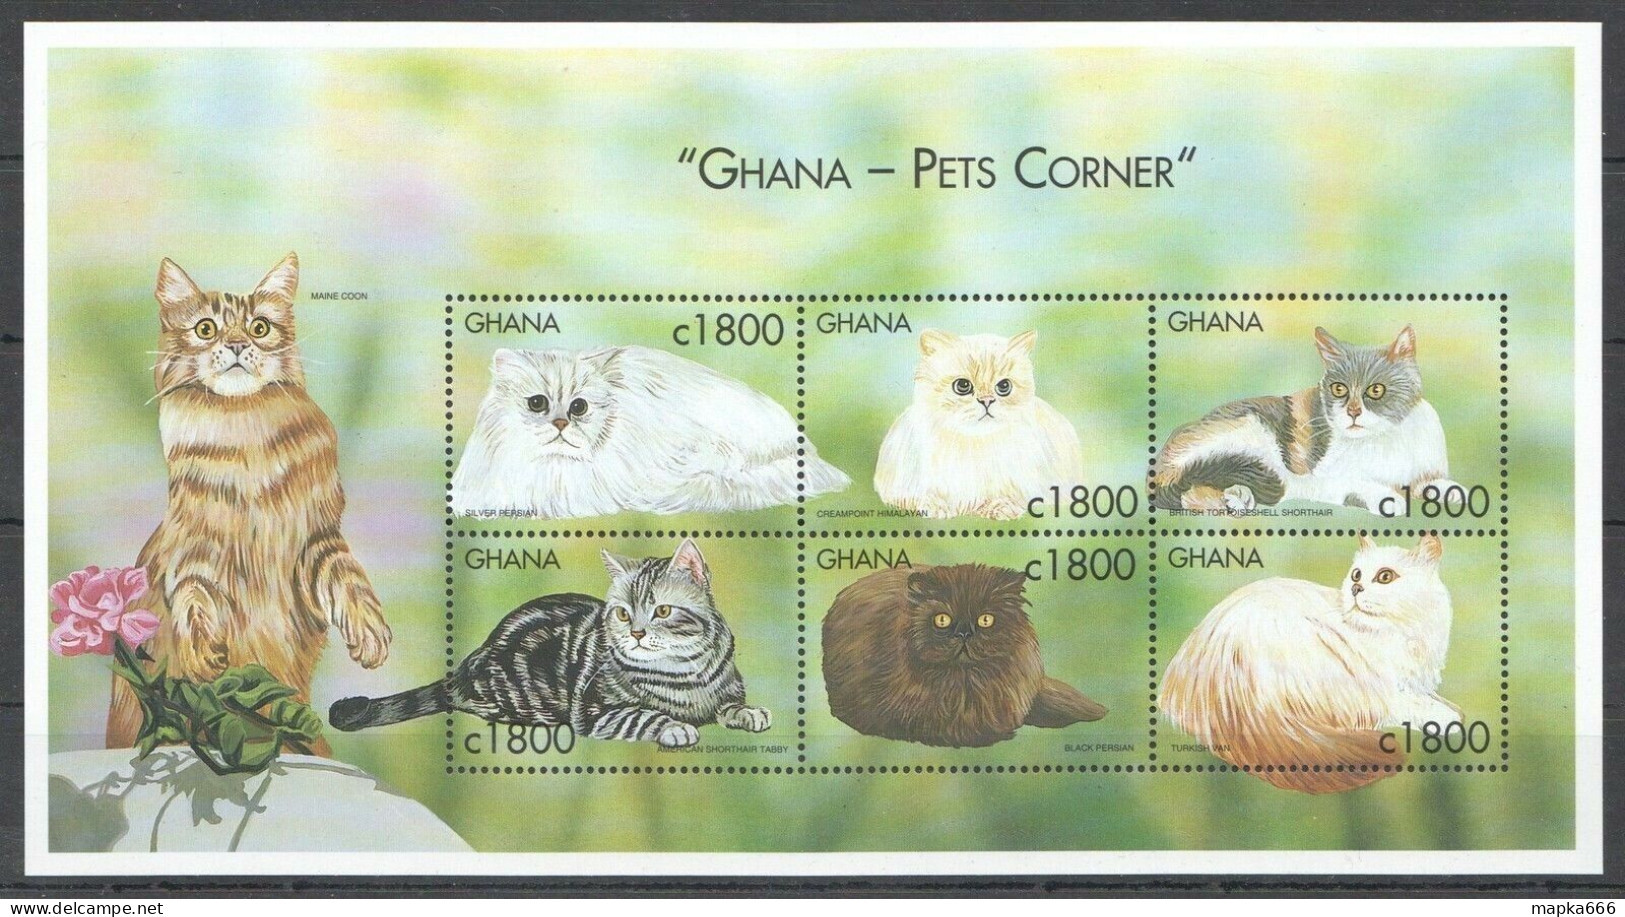 Pk035 Ghana Fauna Pets Corner Cats 1Kb Mnh Stamps - Katten